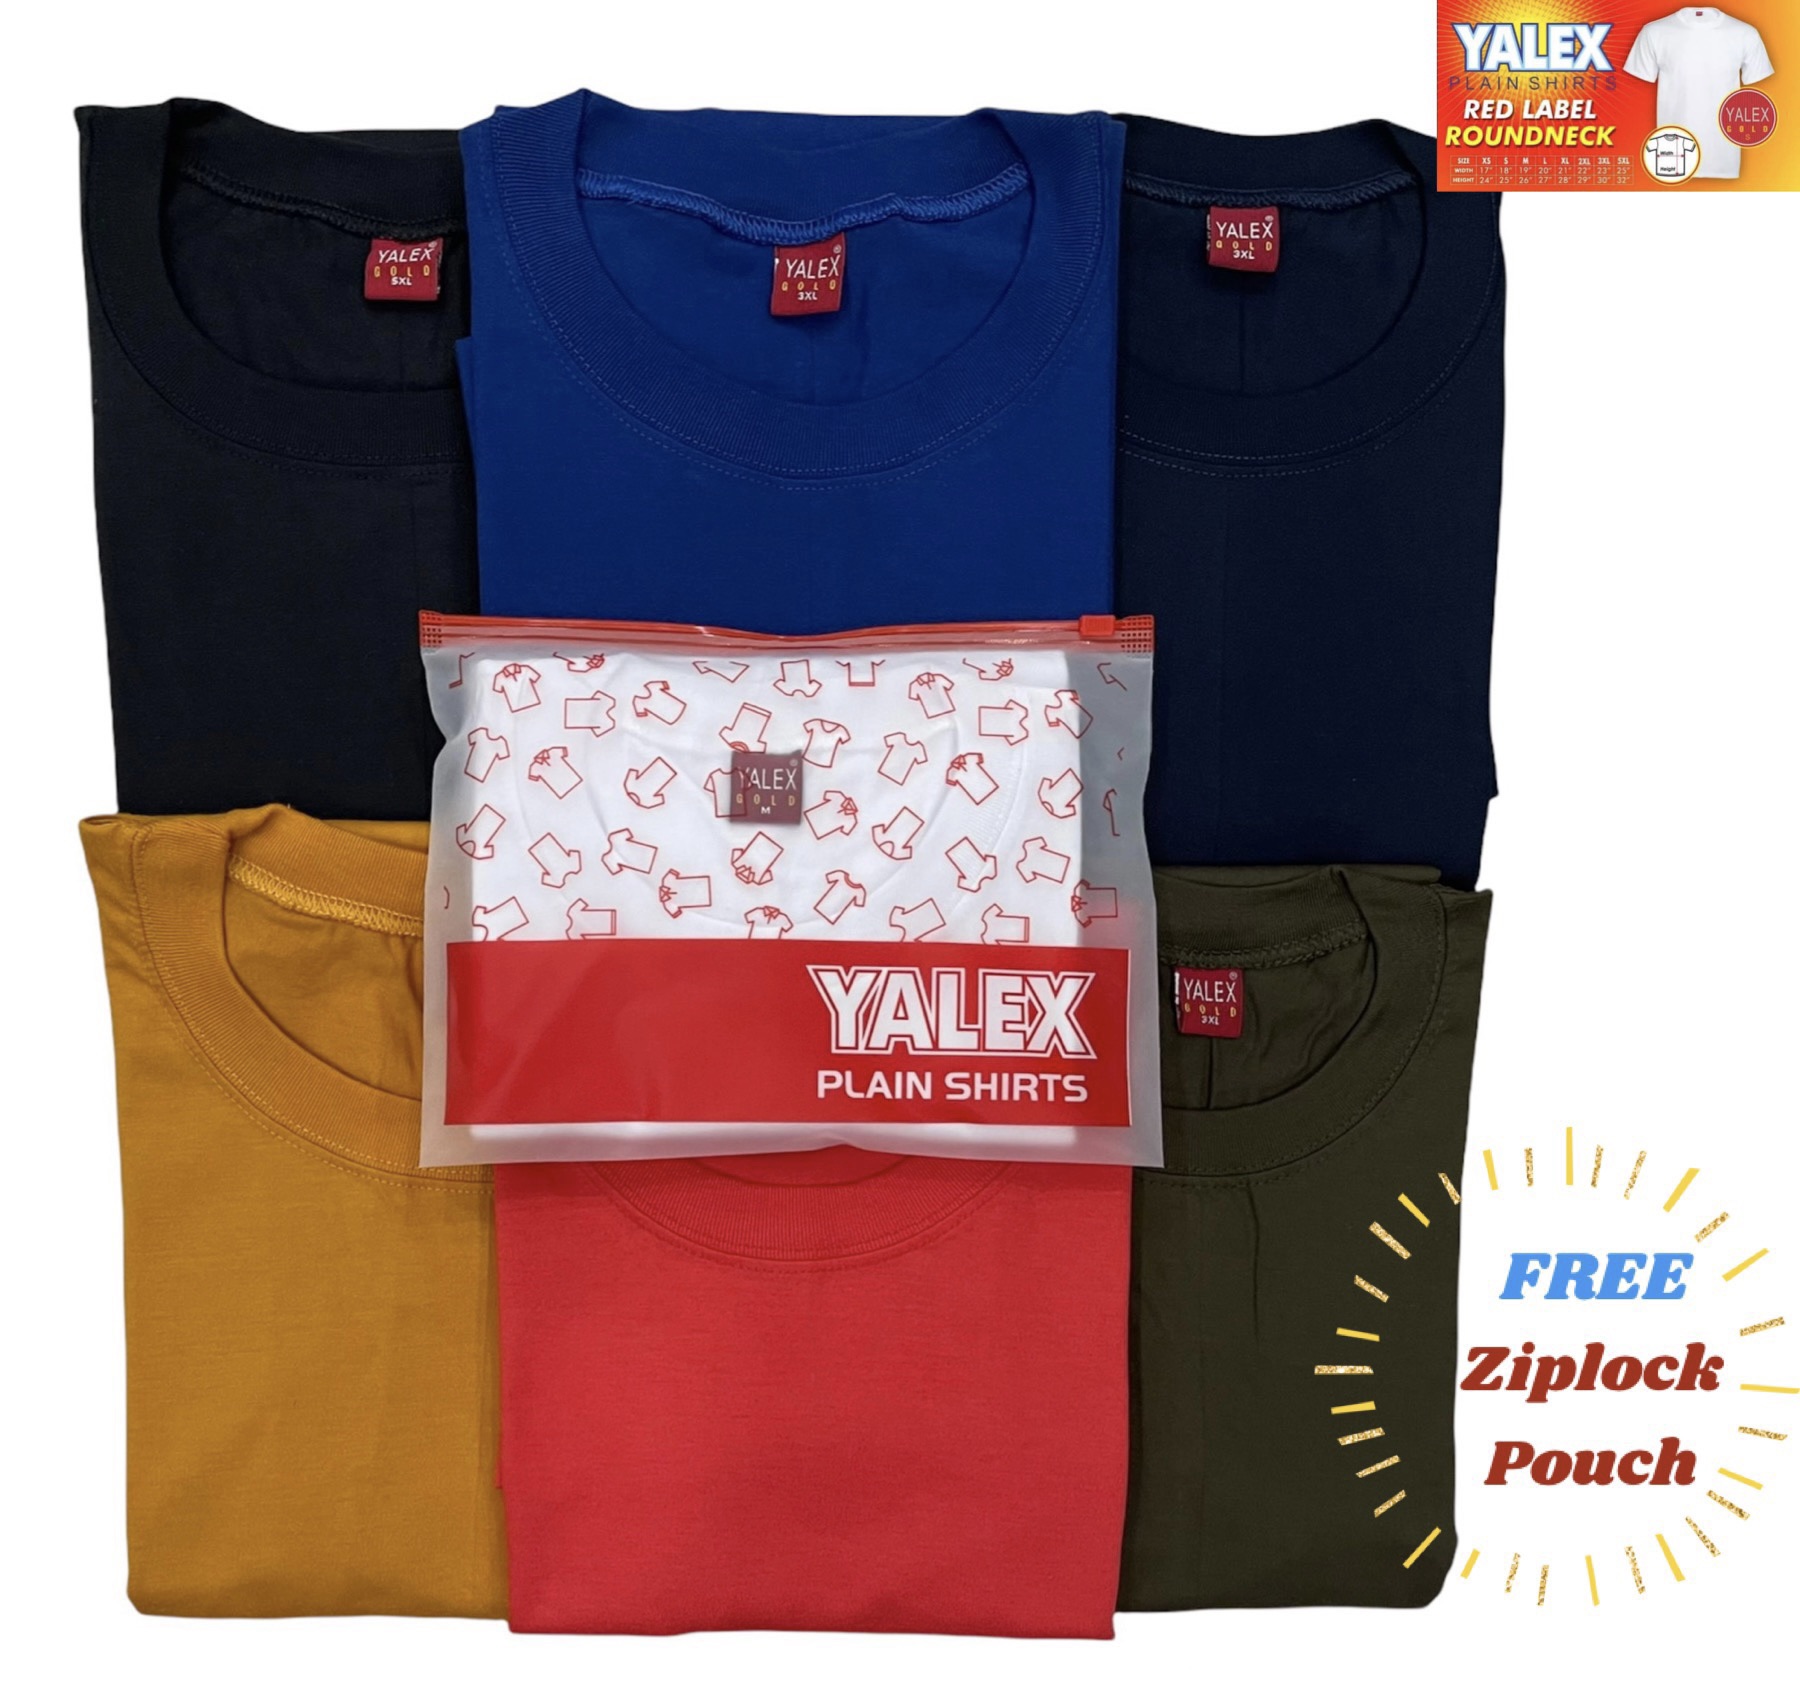 Yalex Red Label Unisex Round Neck Plain Shirts - Light Colors